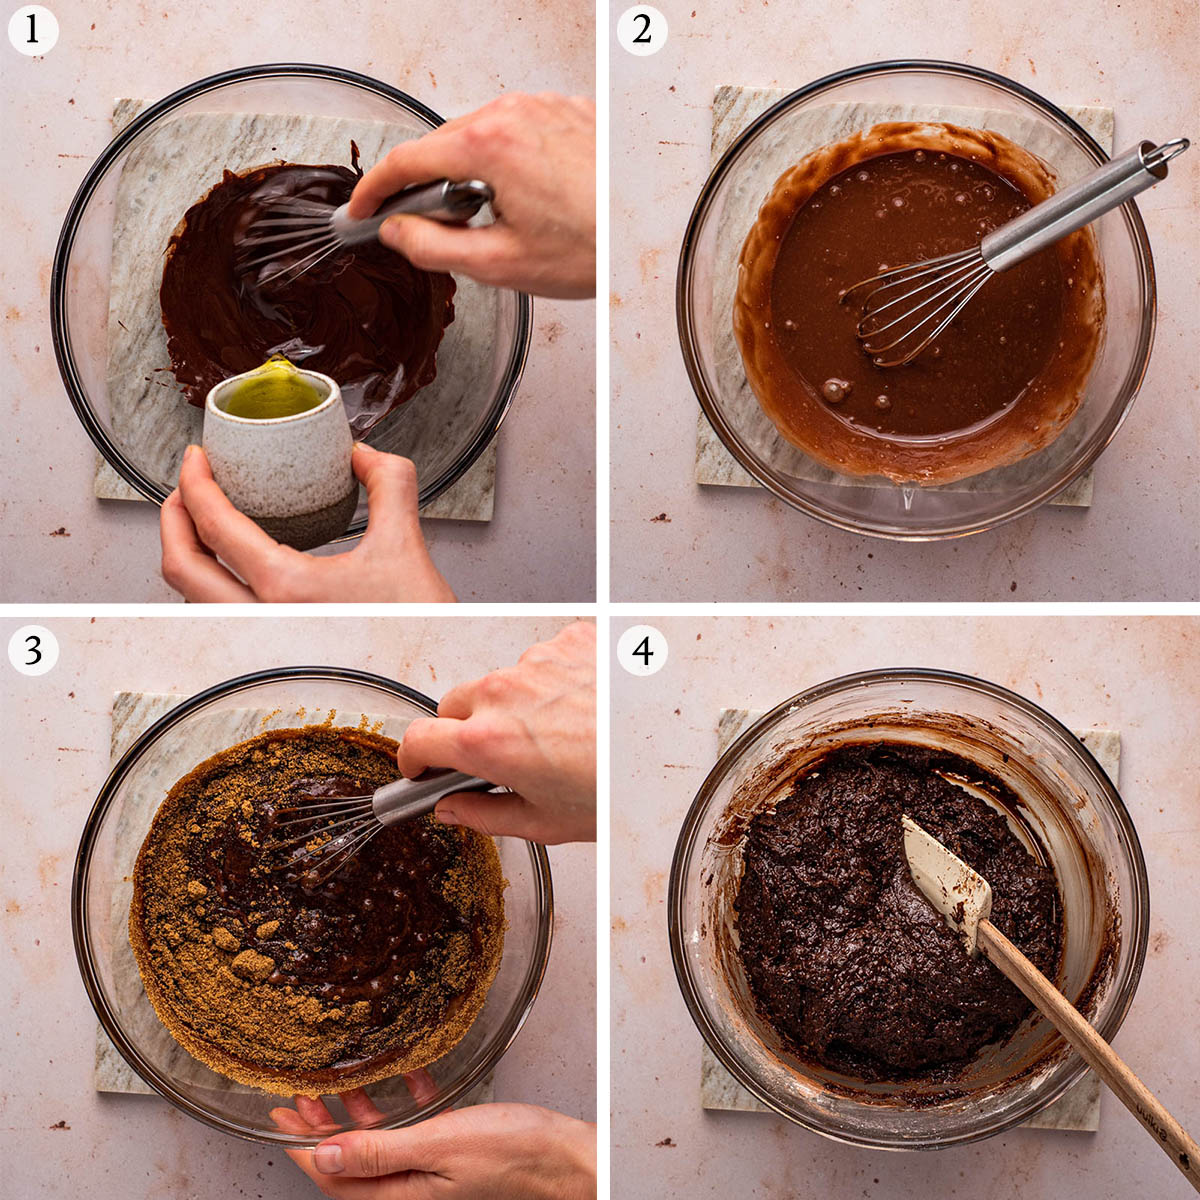 Olive oil brownies steps 1 to 4.